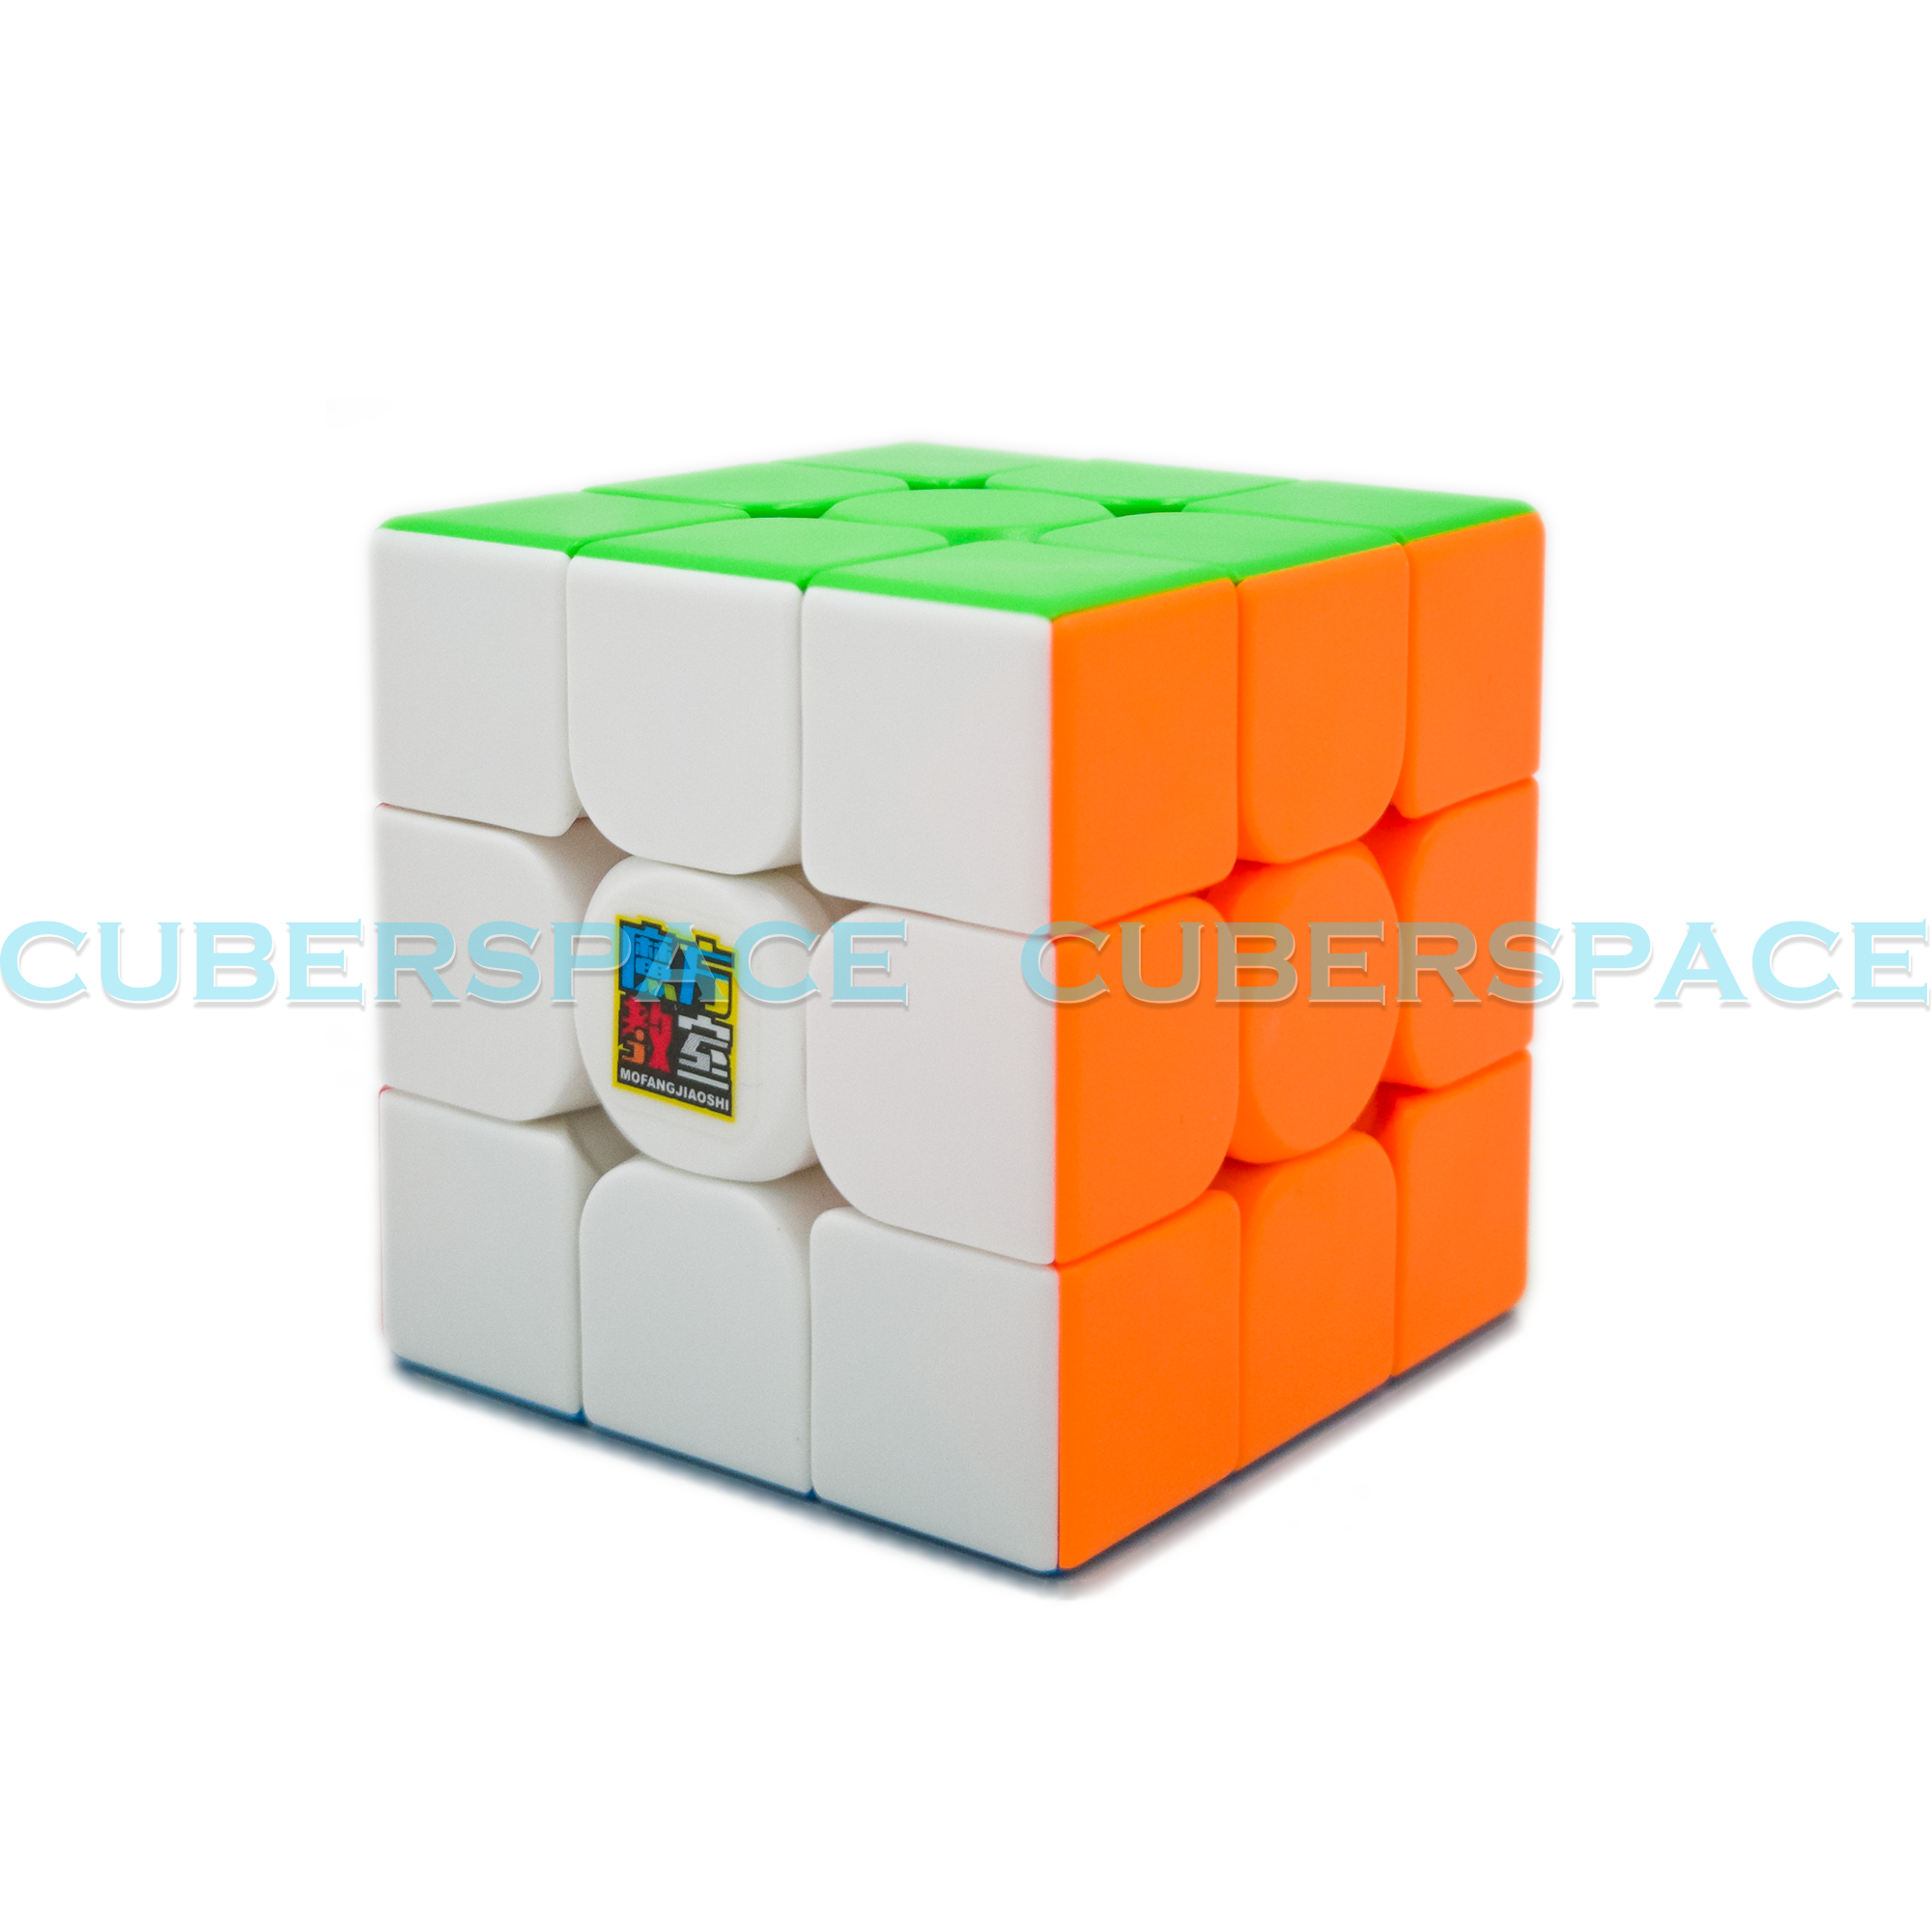 MFJS MeiLong 3x3 M - CuberSpace